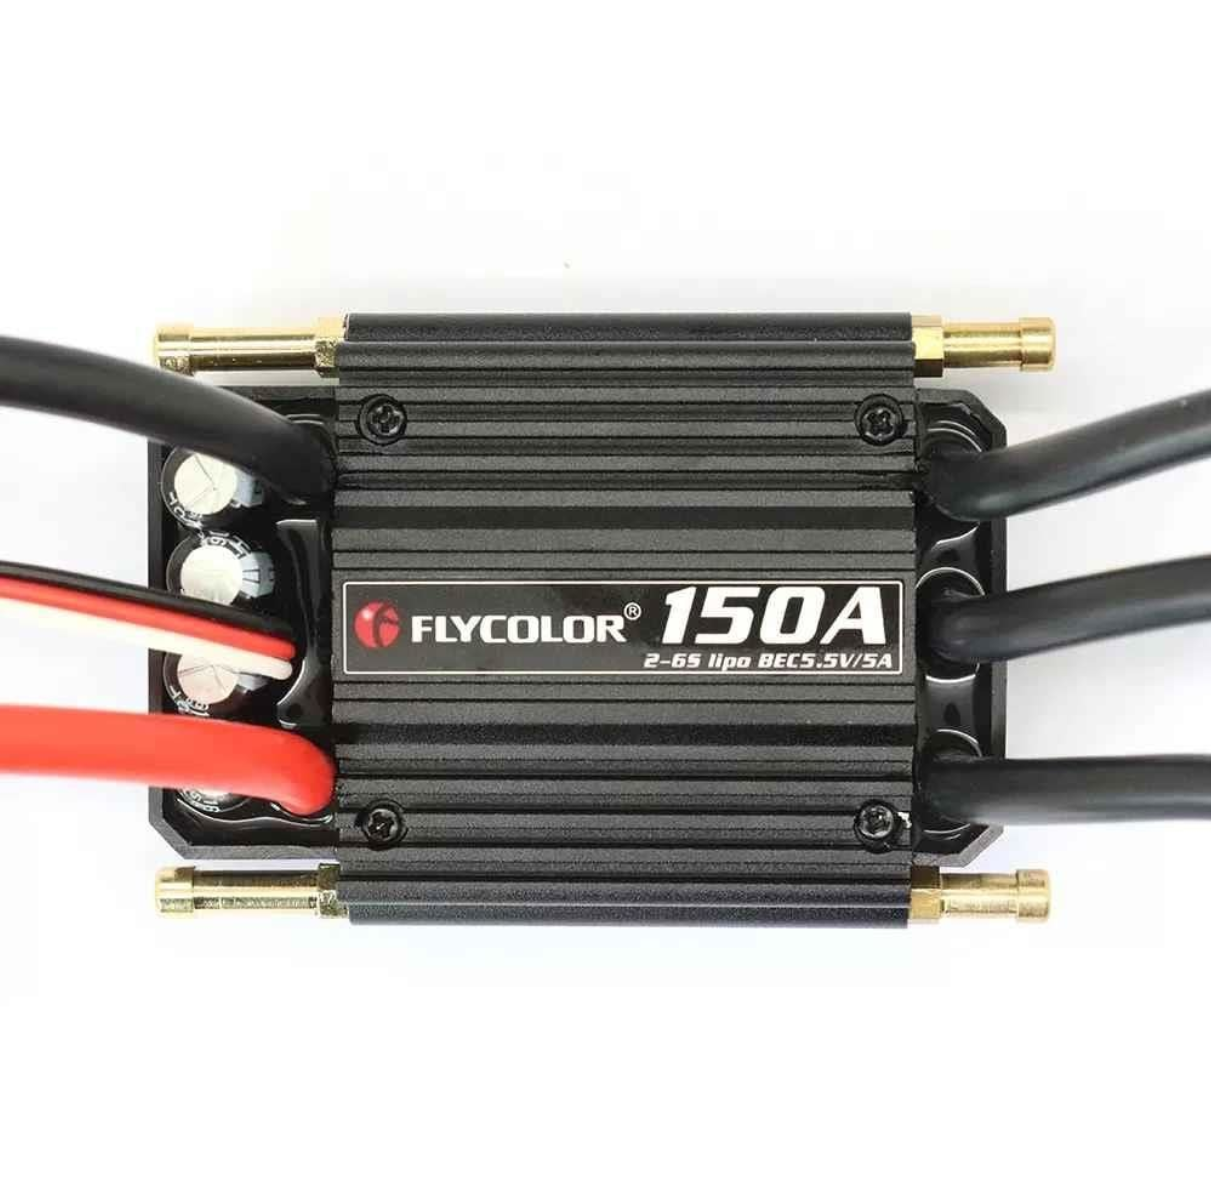 Flycolor Waterproof 150A 2-6S Brushless ESC 5.5V/5A BEC